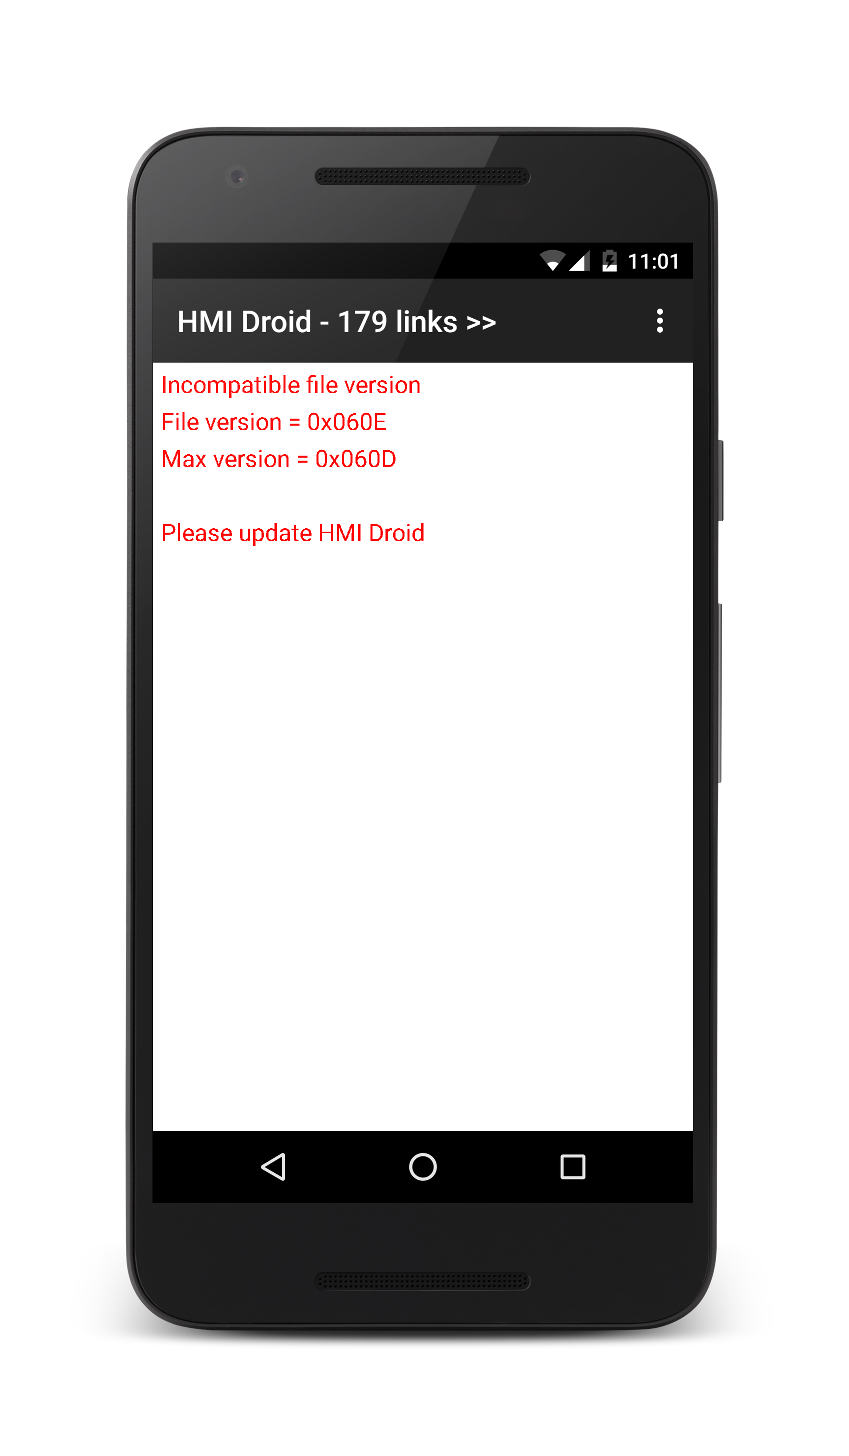 HMI Droid file version error message